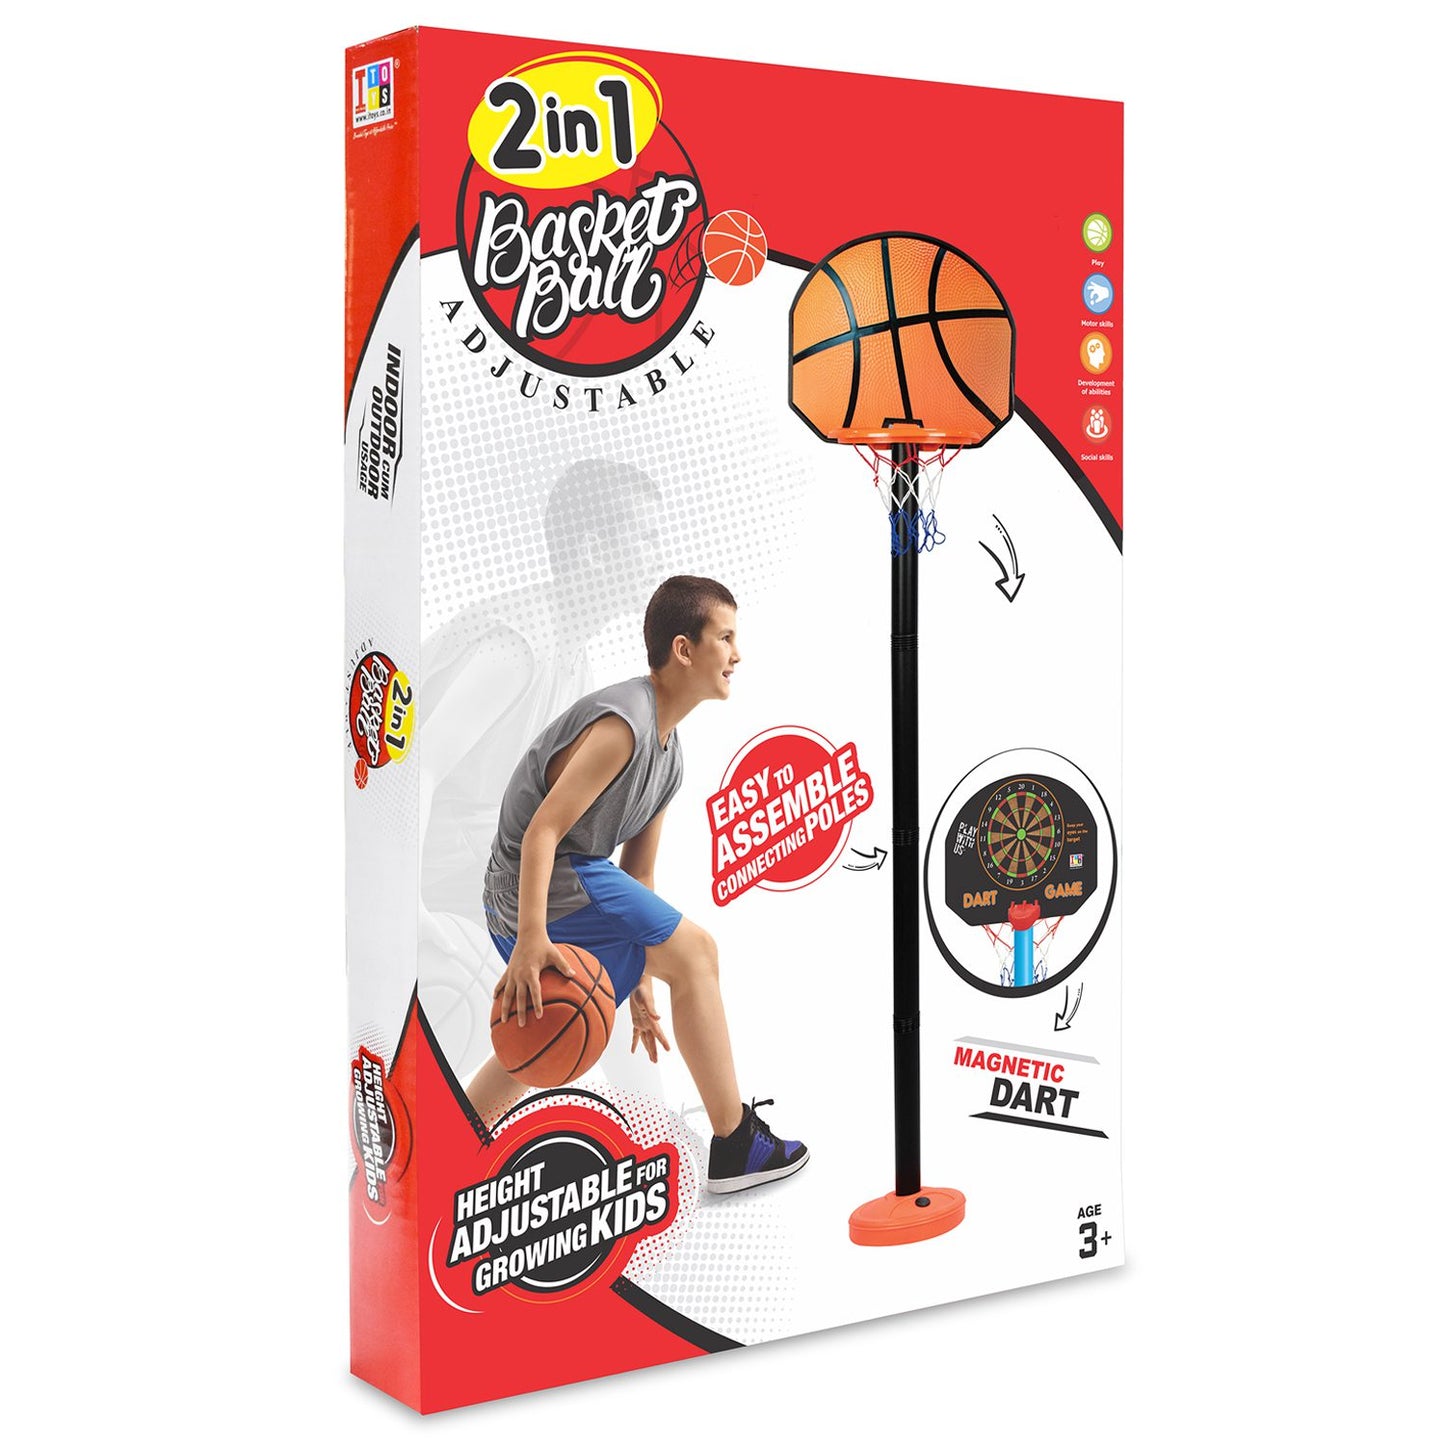 2 IN 1 Basket ball Adjustable for growing kids